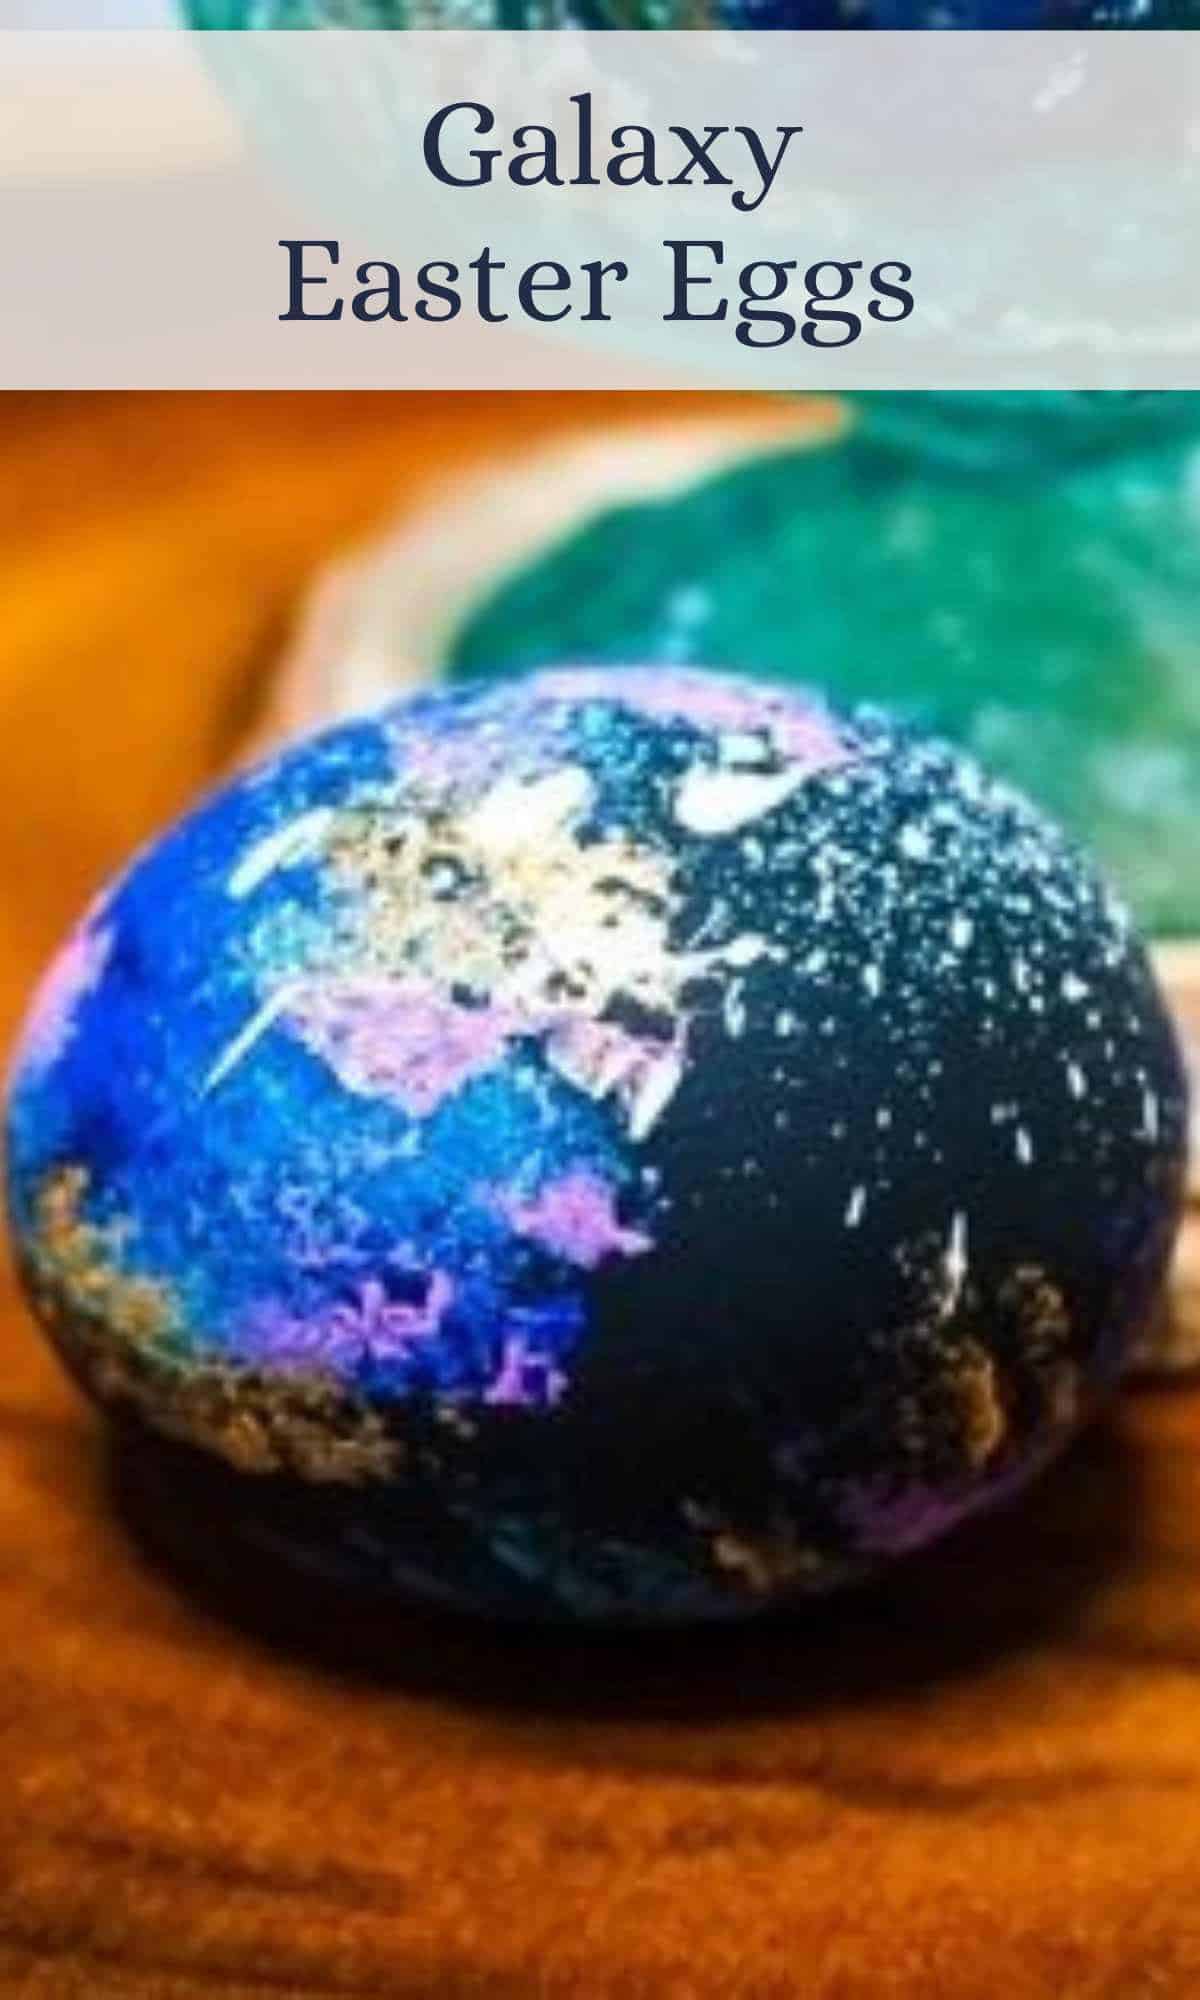 Galaxy Easter eggs - cute Easter egg design for kids